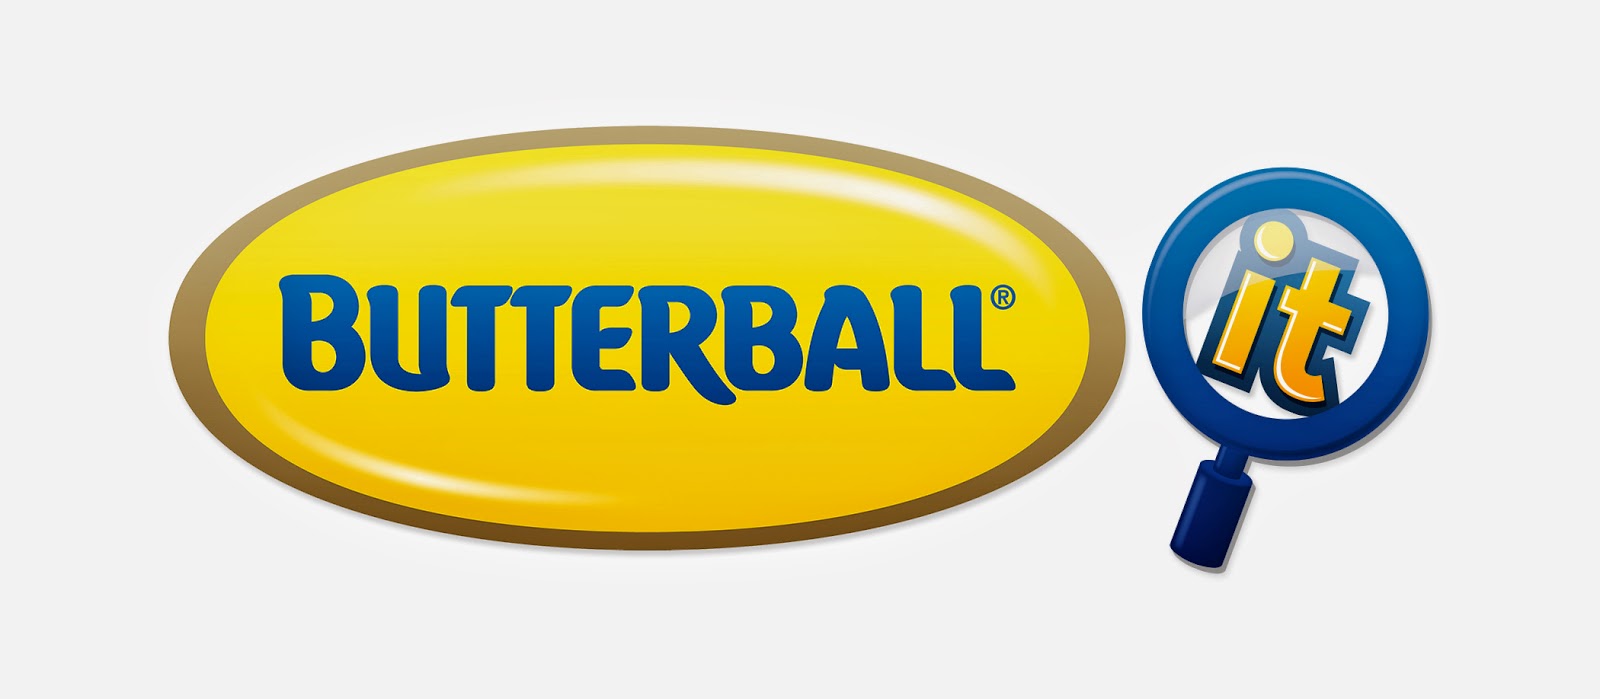 Butterball It logo